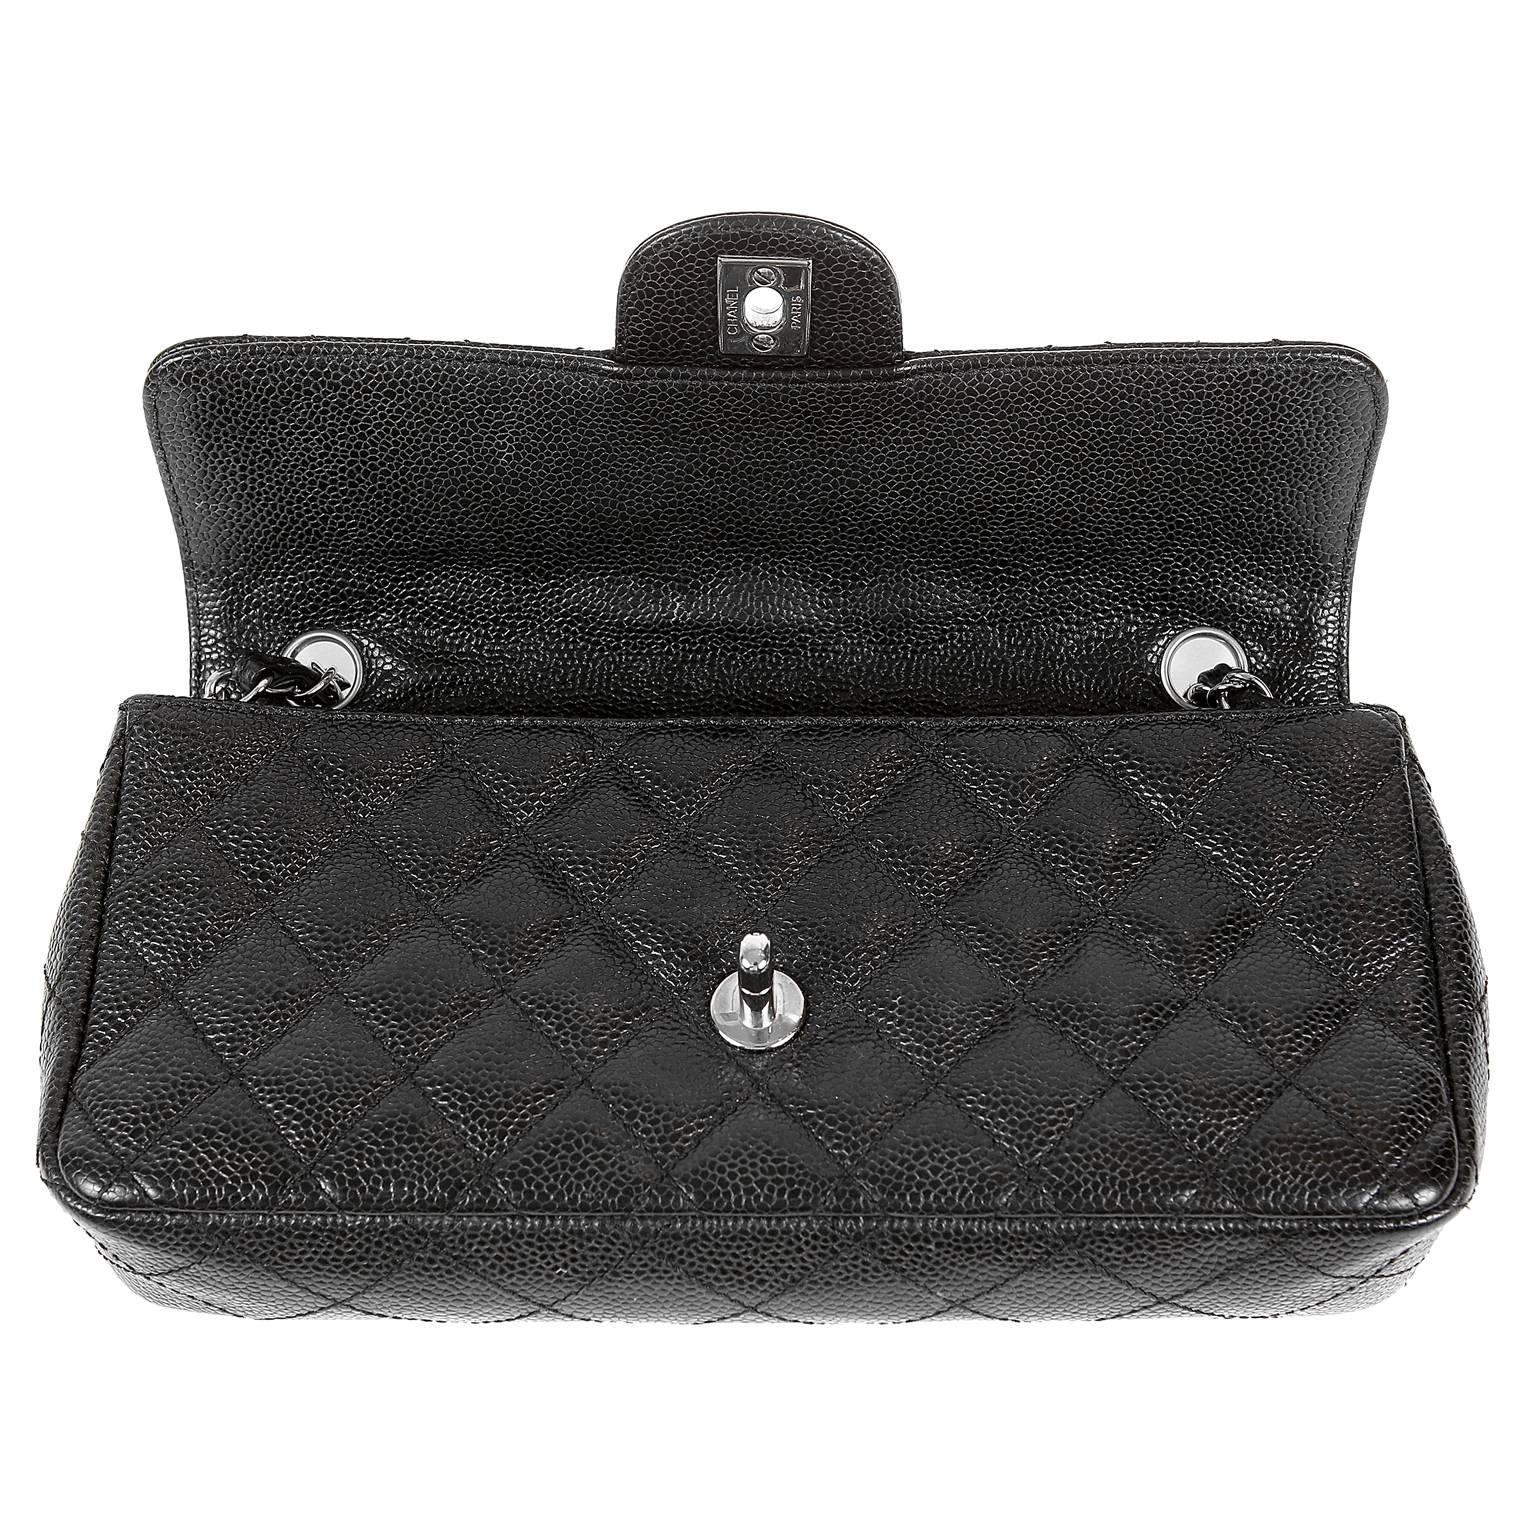 Chanel Black Caviar Leather East West Flap Bag 2